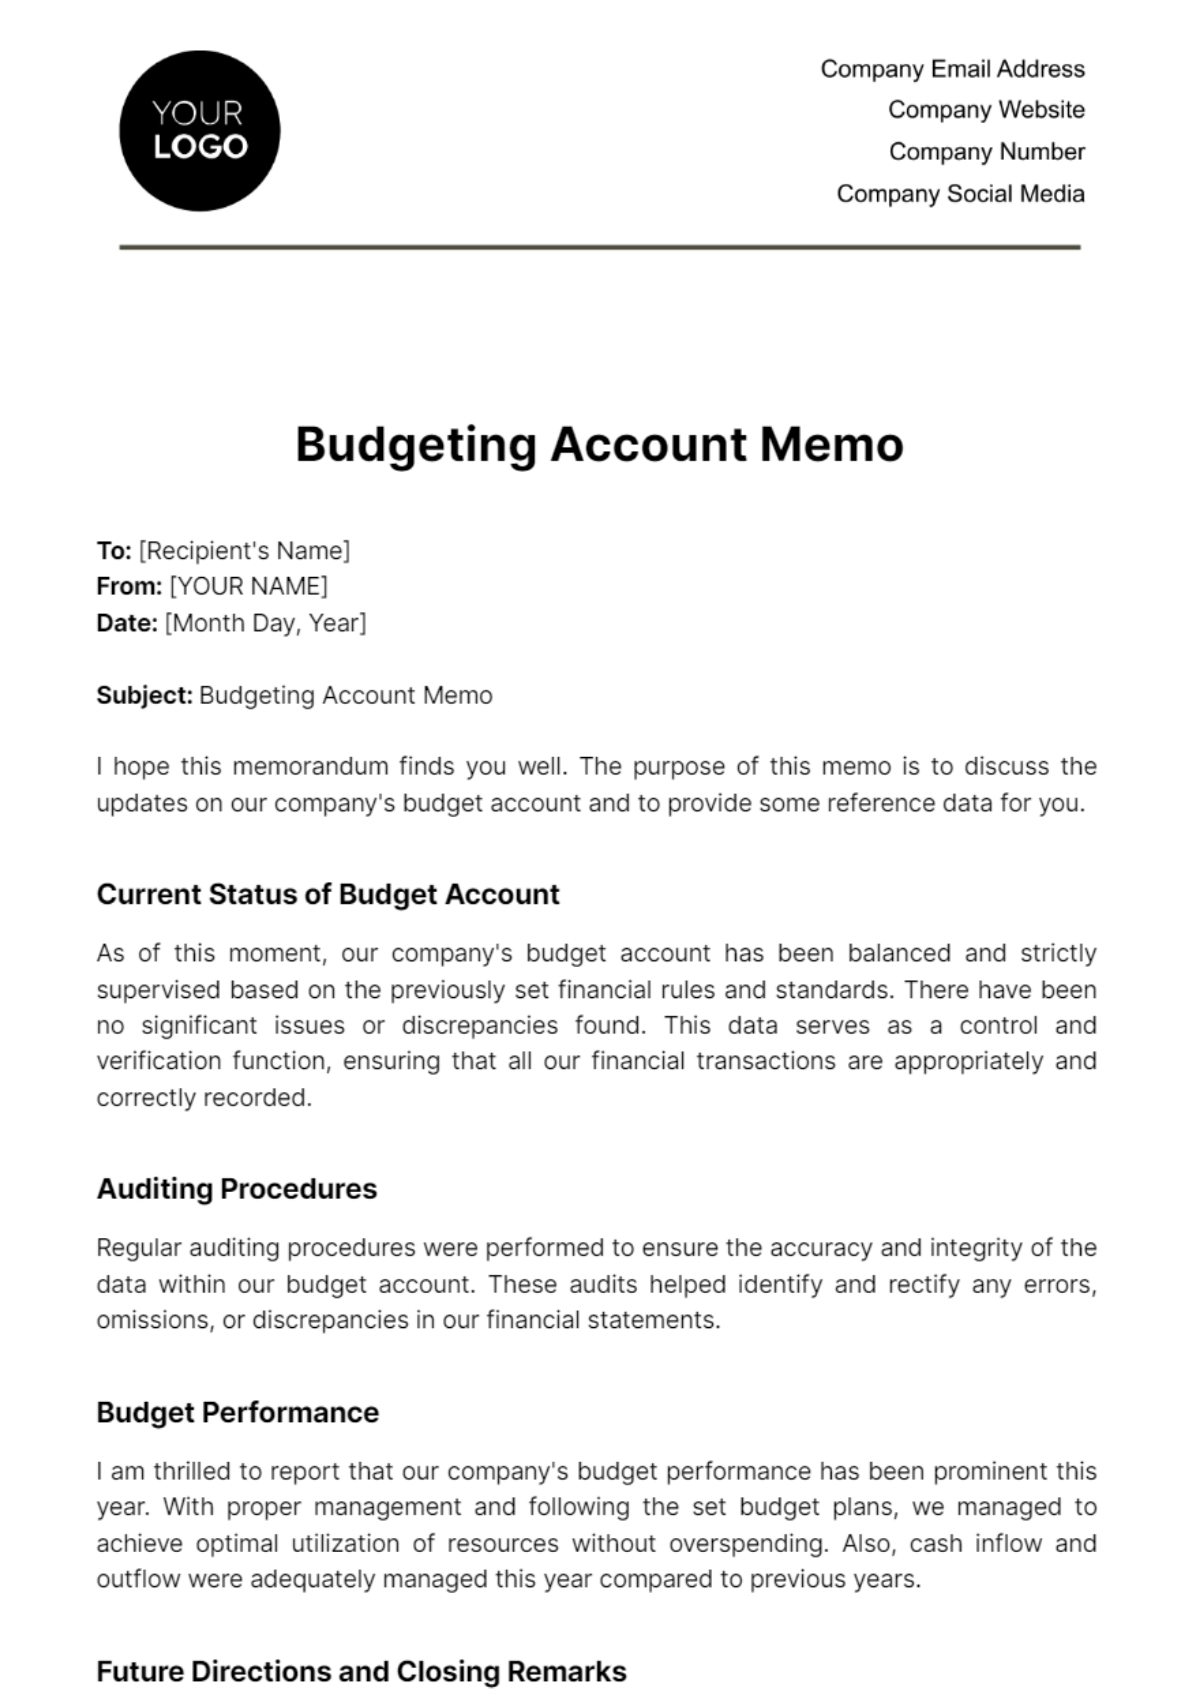 Budgeting Account Memo Template